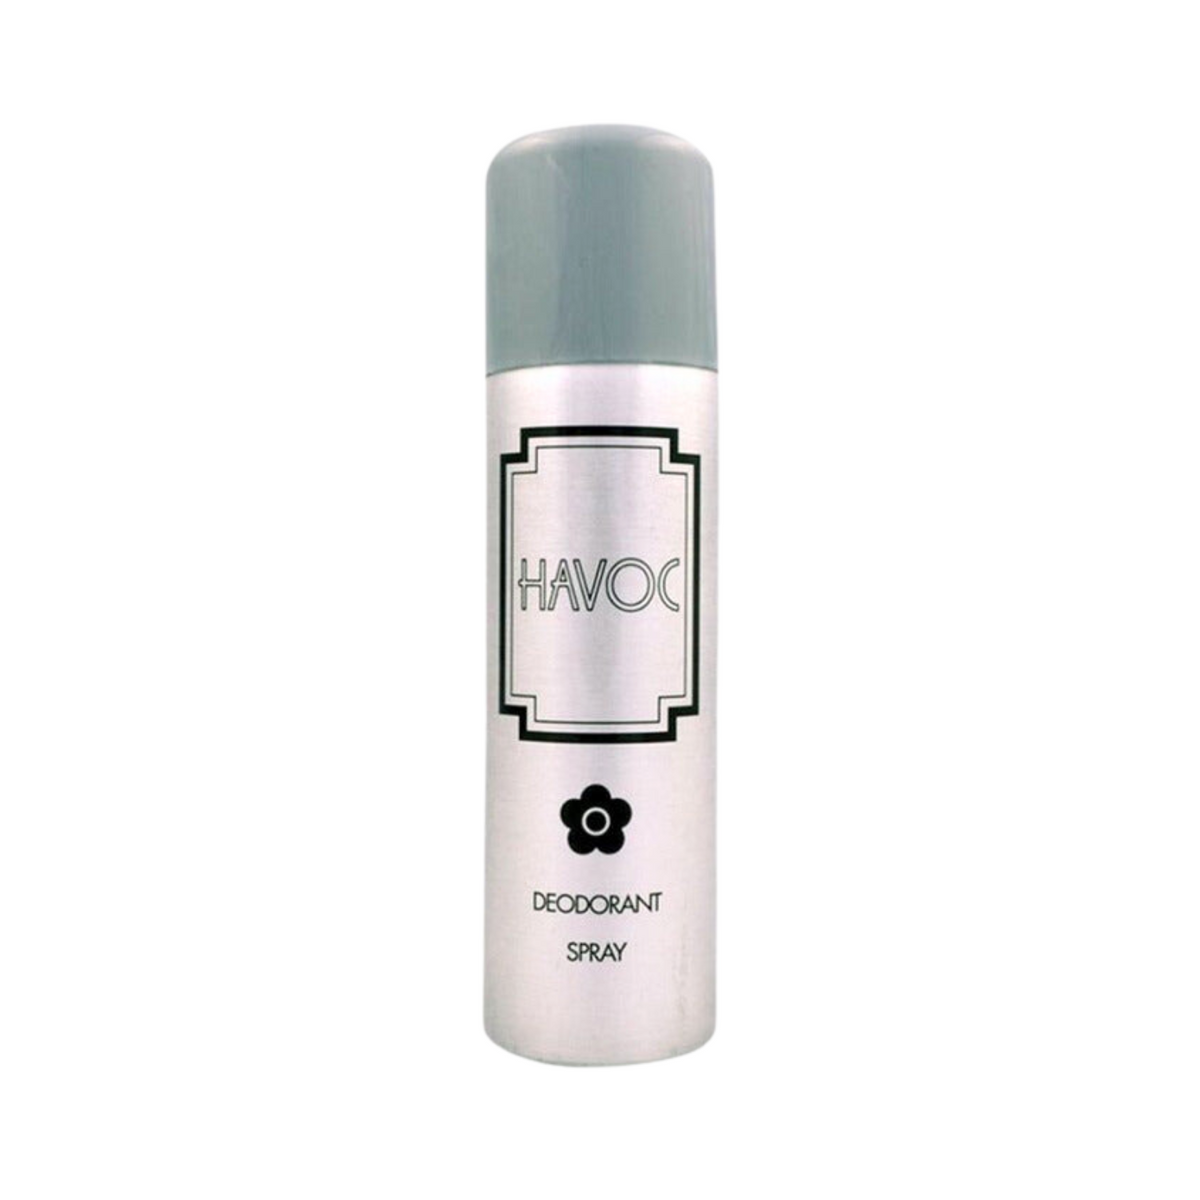 havoc-silver-deodorant-body-spray-200ml